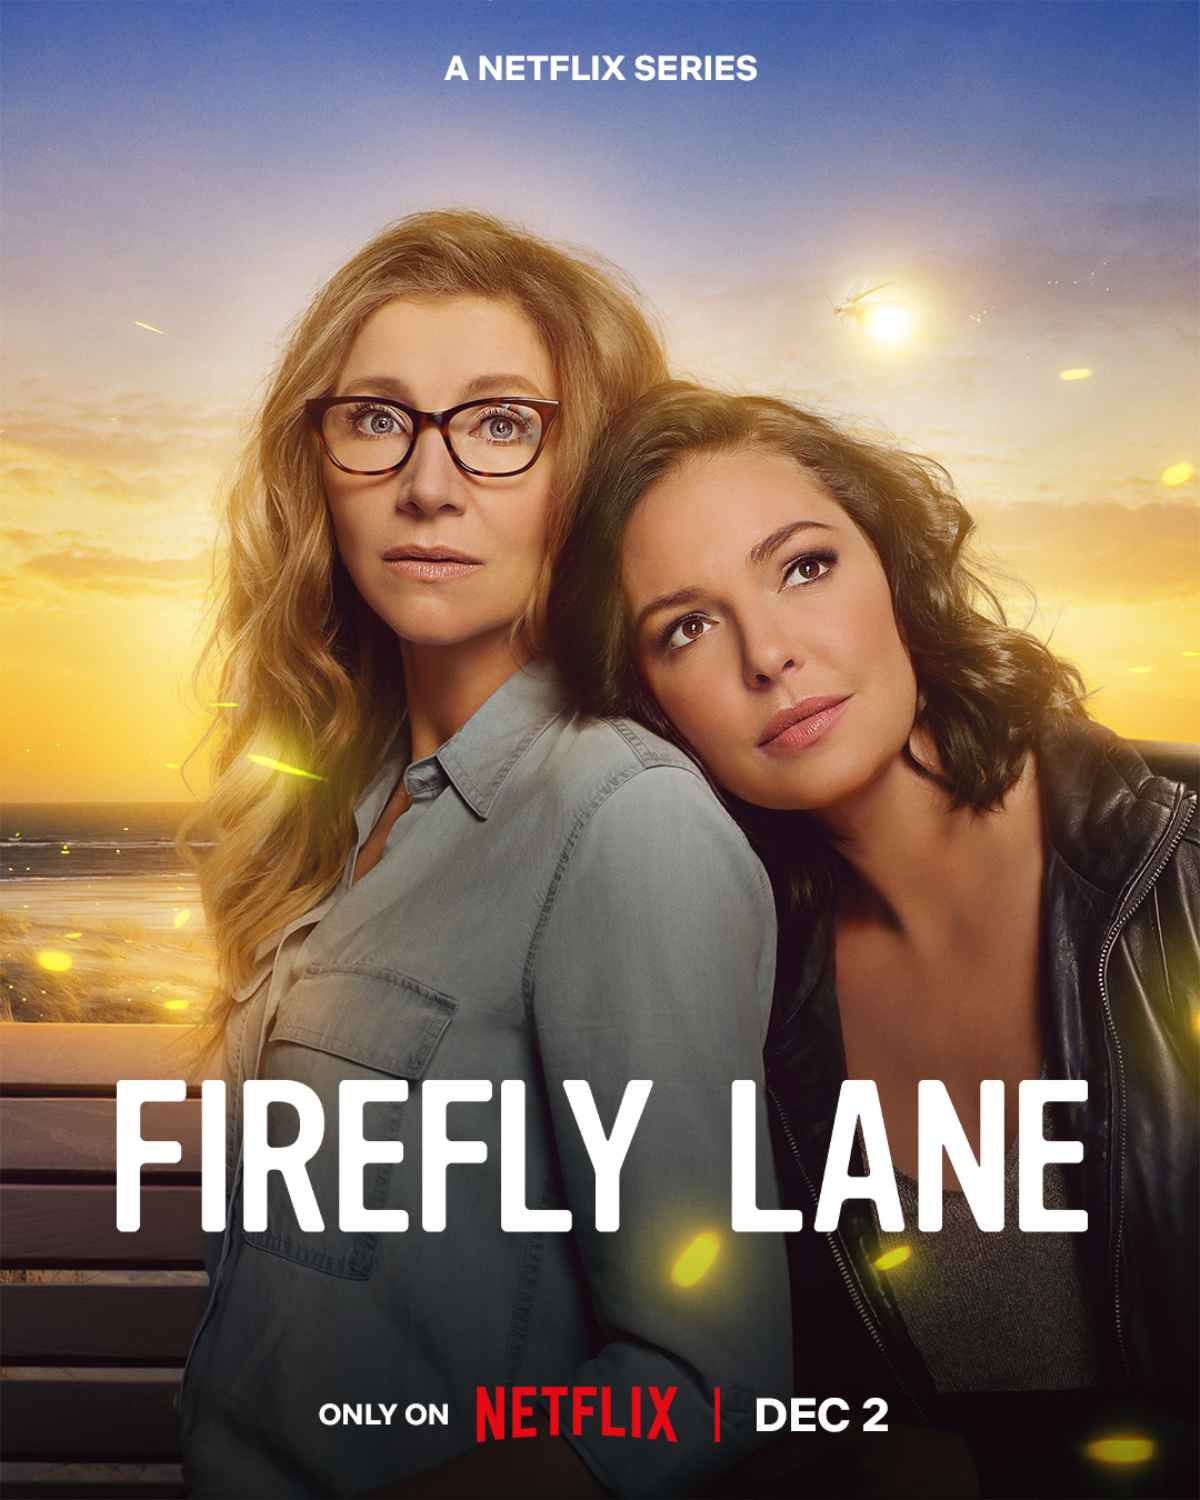 [TV] Firefly Lane Season 2 (Netflix)